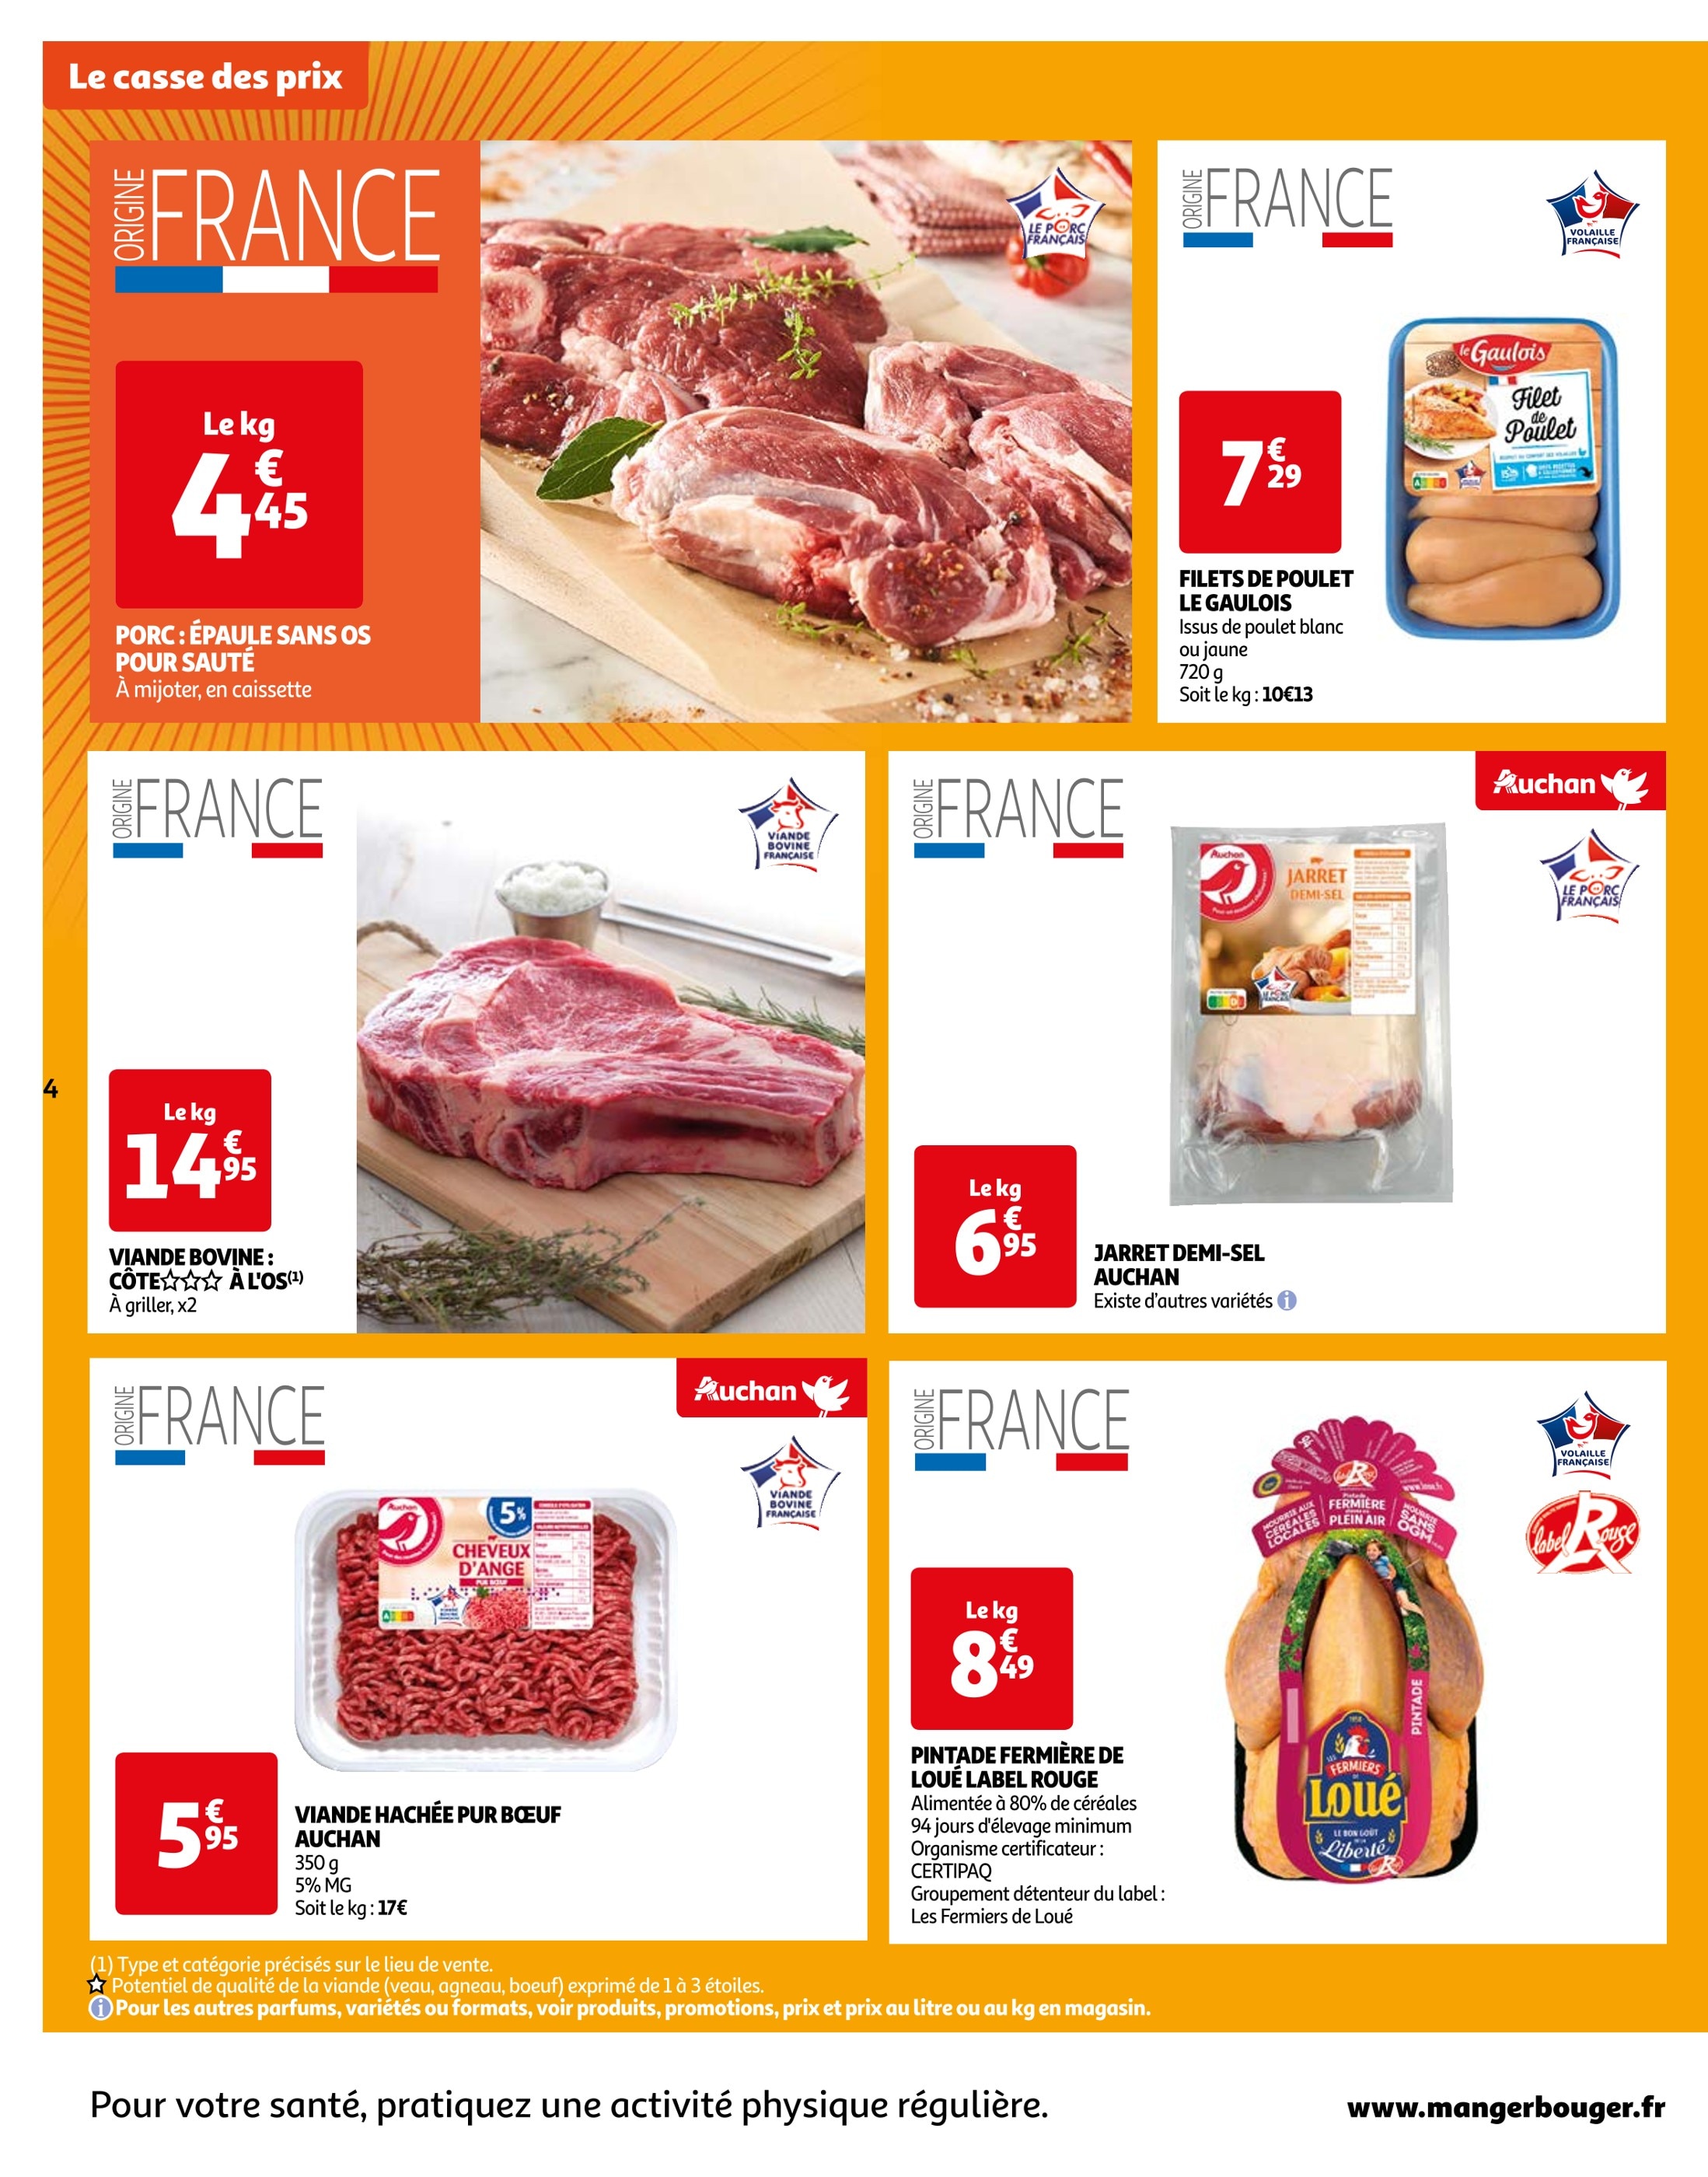 Charal - Viande bovine : Steak *** x 2 - Supermarchés Match